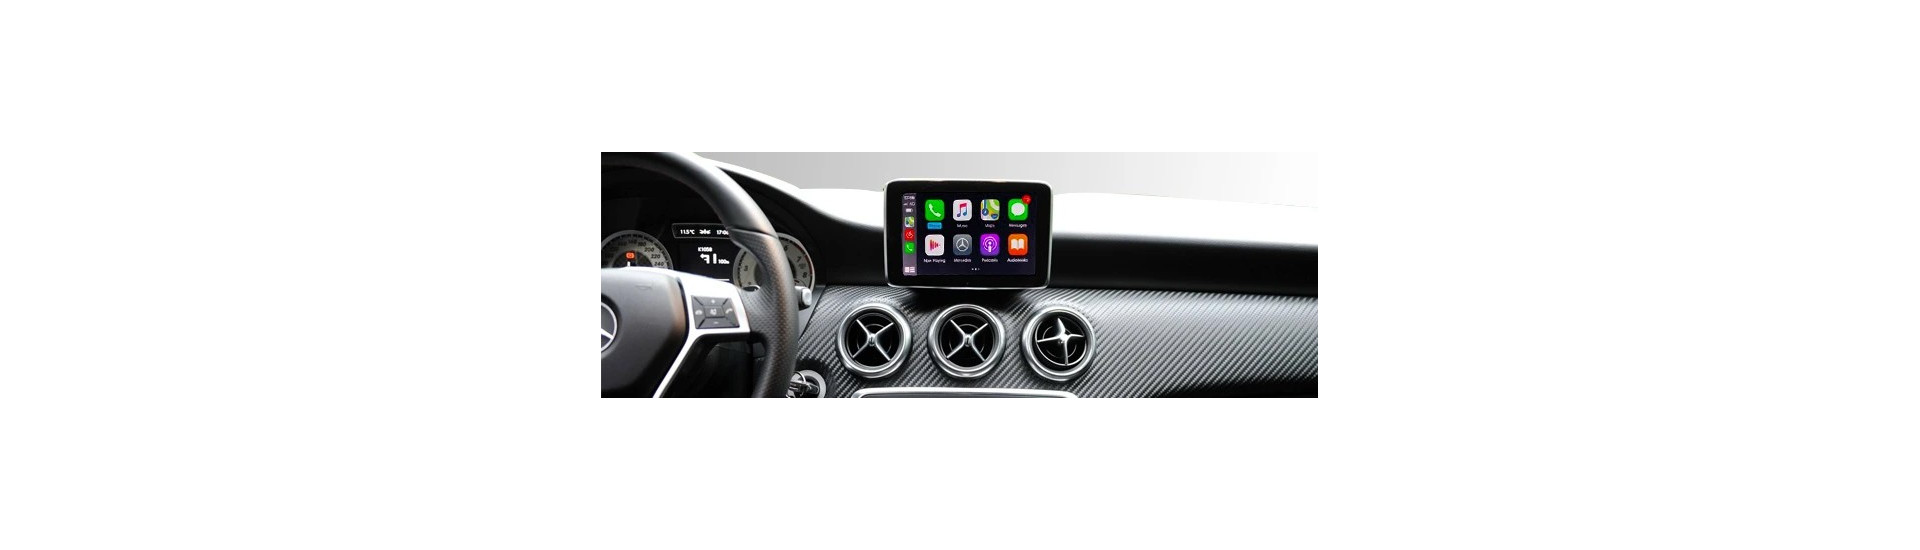 Interesat de Apple CarPlay/Android Auto pentru Mercedes NTG 4.5/5.0?